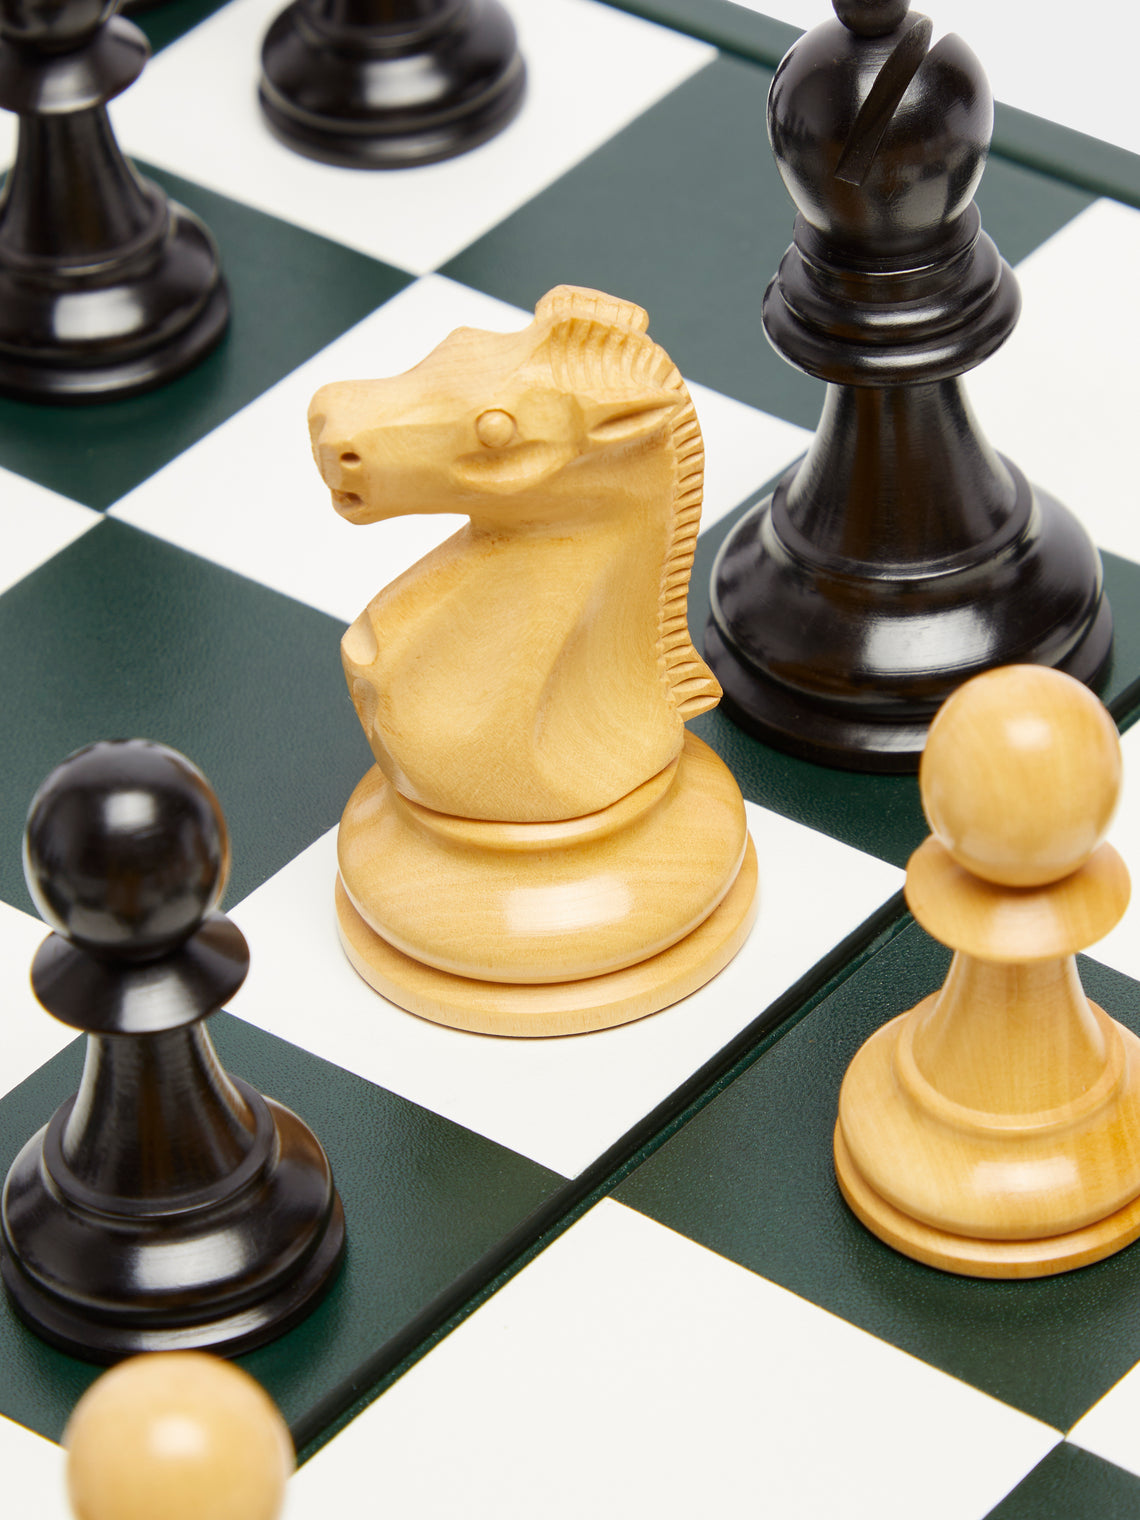 Asprey - Hanover Saddle Hide Chess Set - Green - ABASK